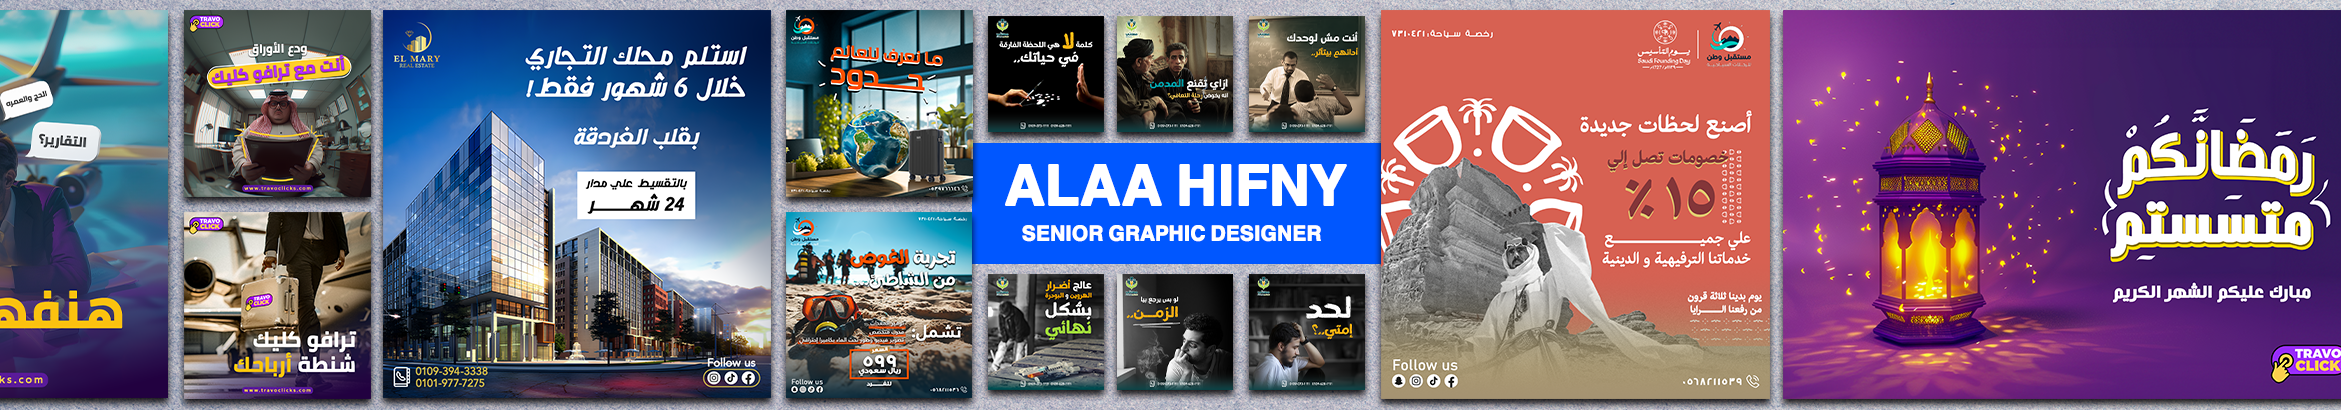 Alaa Hifny's profile banner